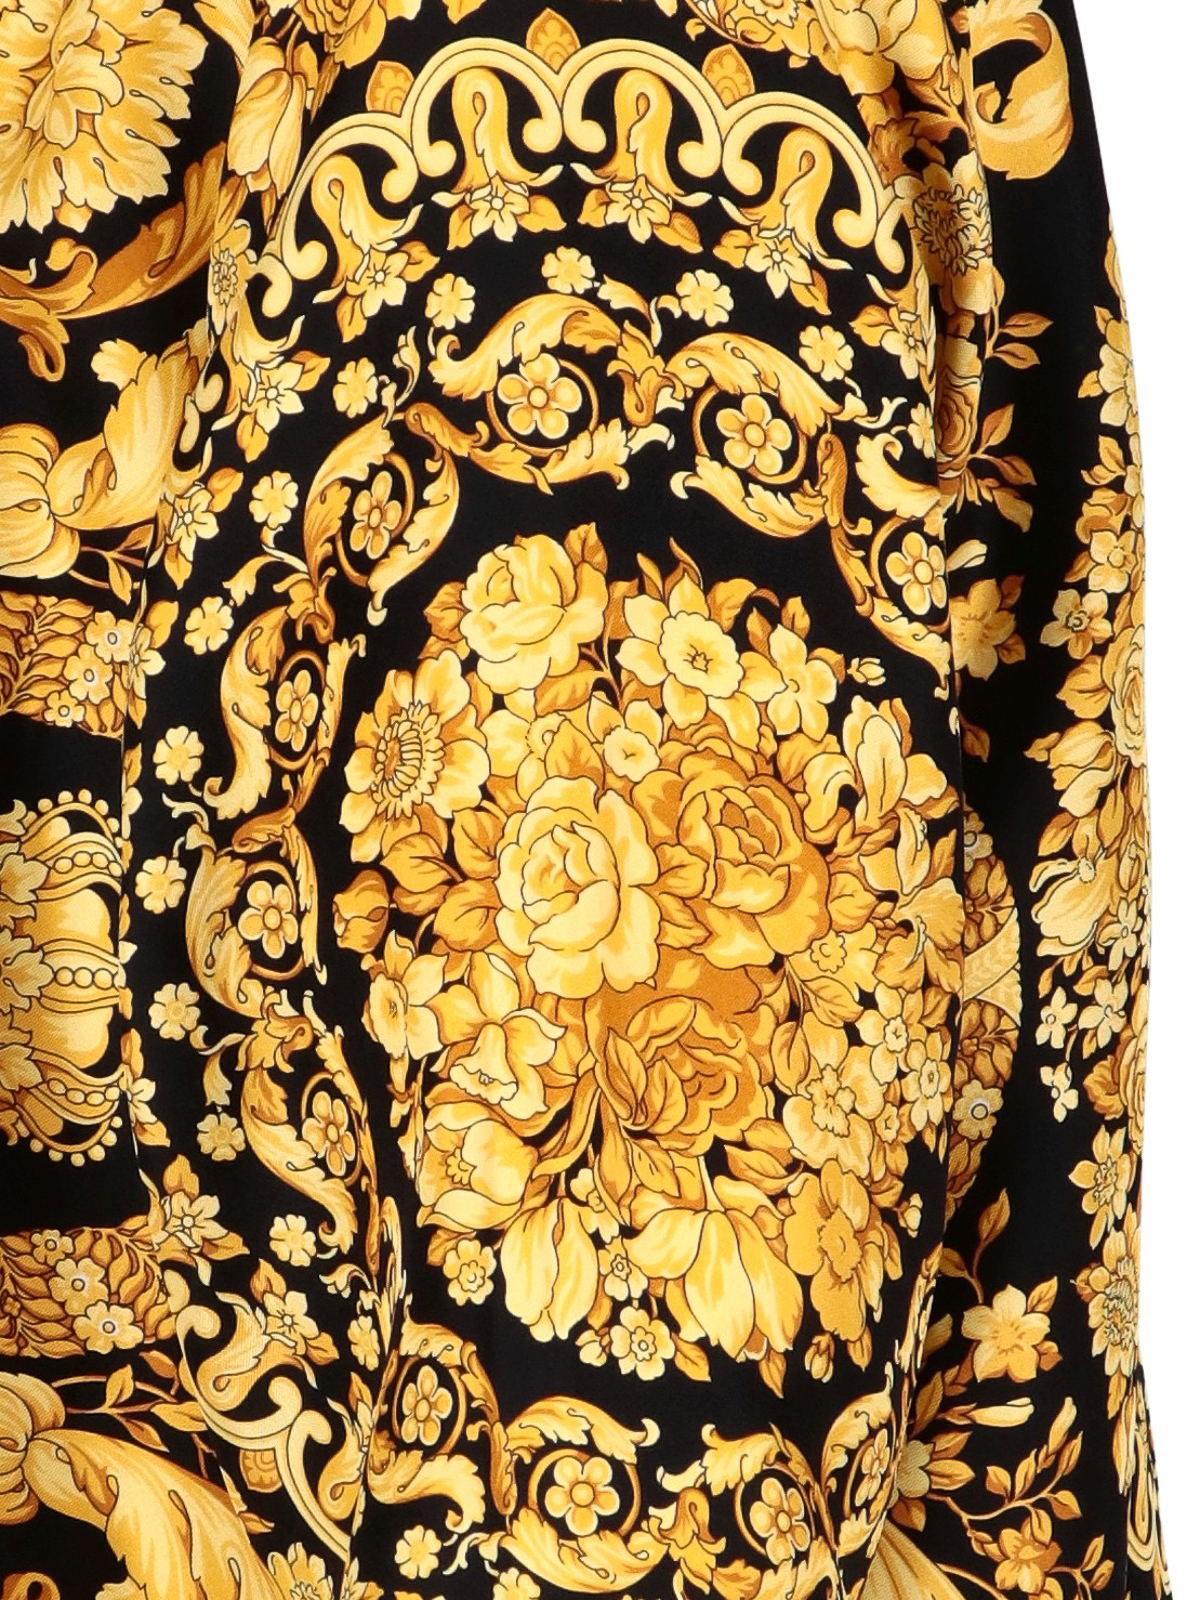 Versace Fabric 